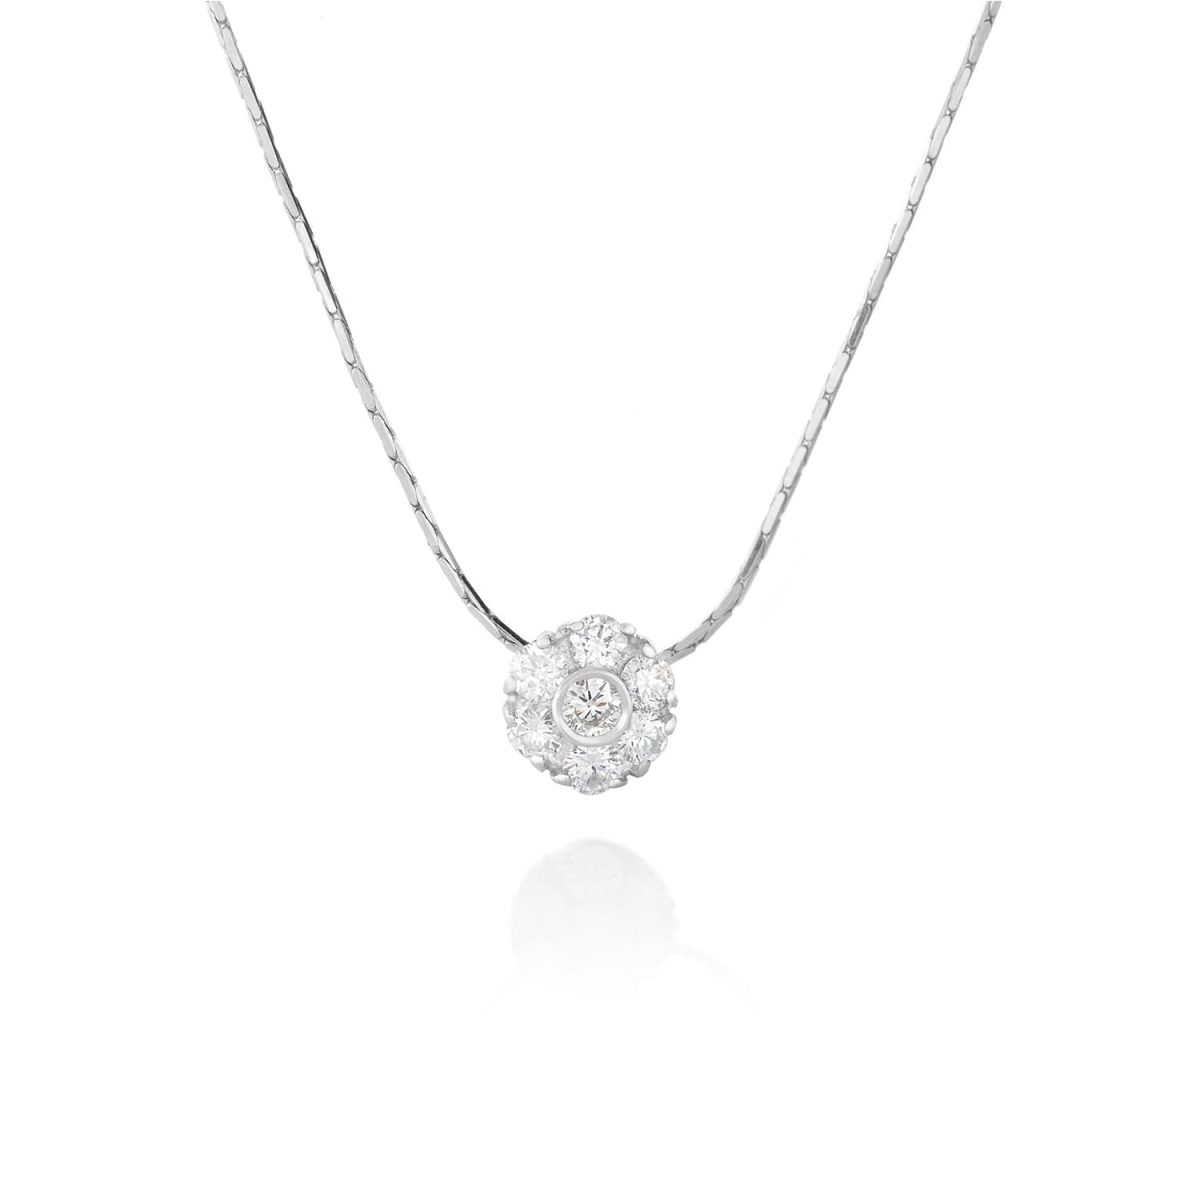 Collar Classic Collar de oro blanco de 18K adornado con 0,53ct de diamantes talla brillante.